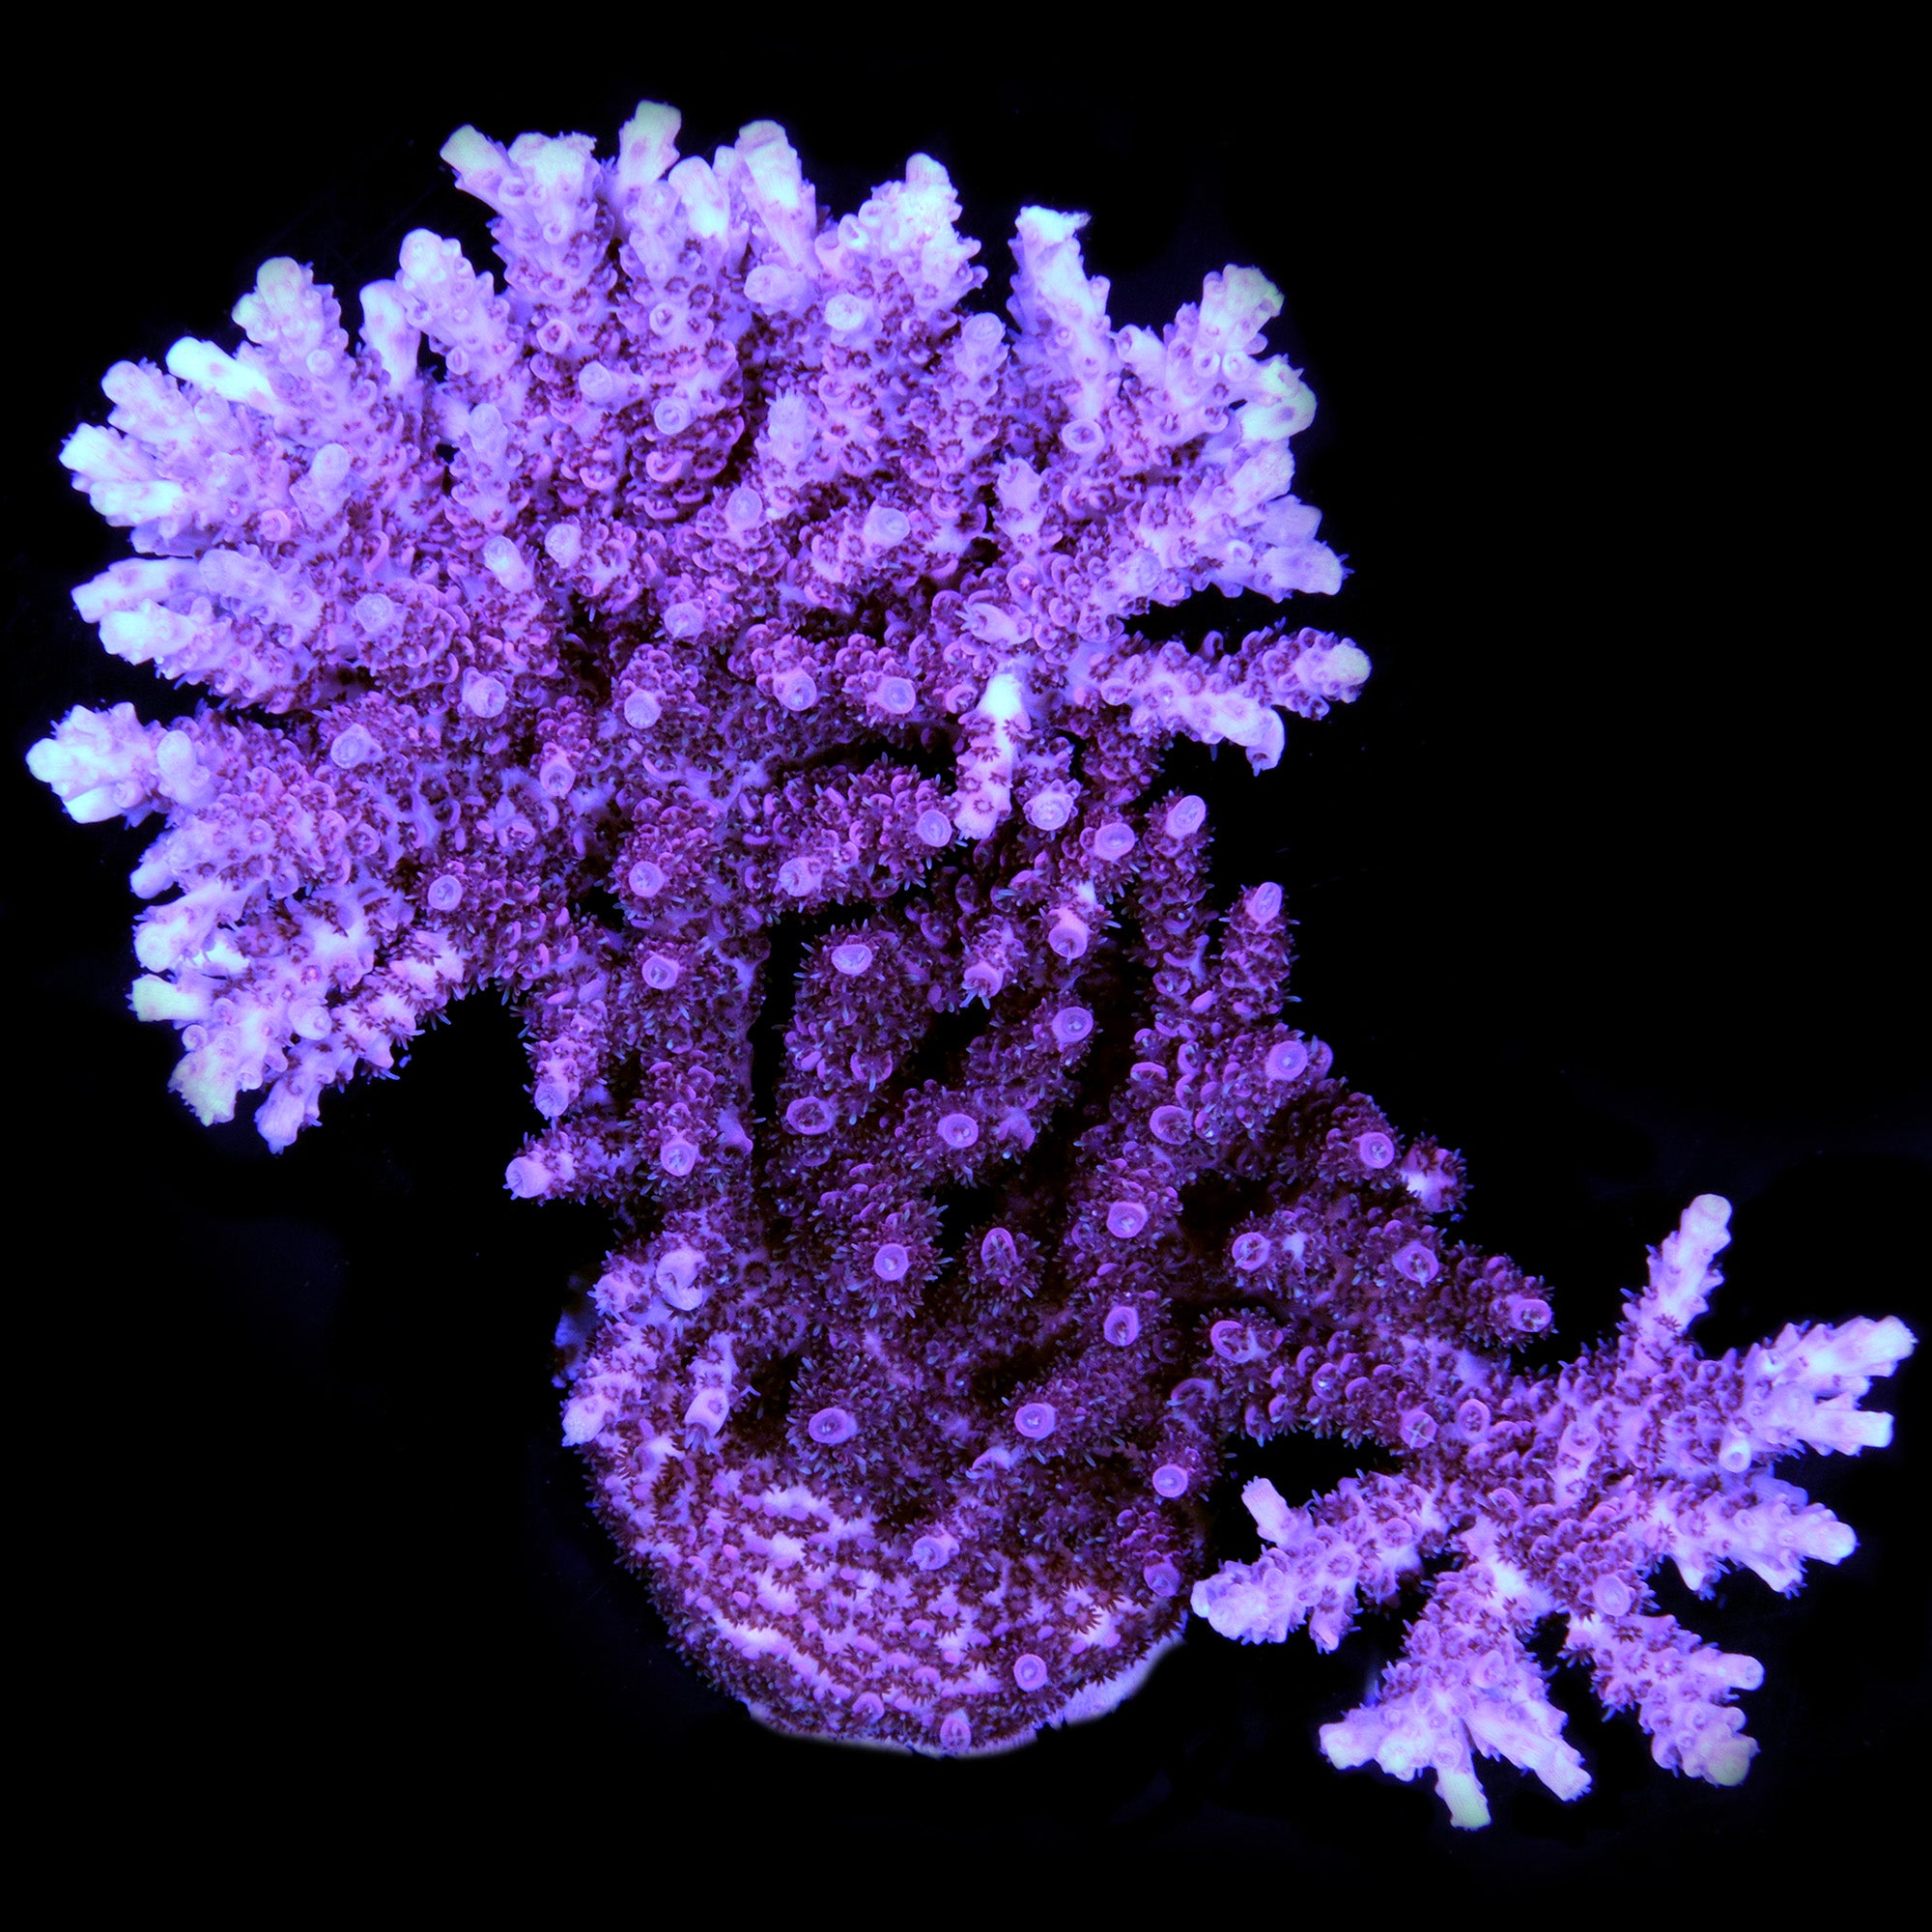 Aqua Cultured Red Table Acropora Coral Colony